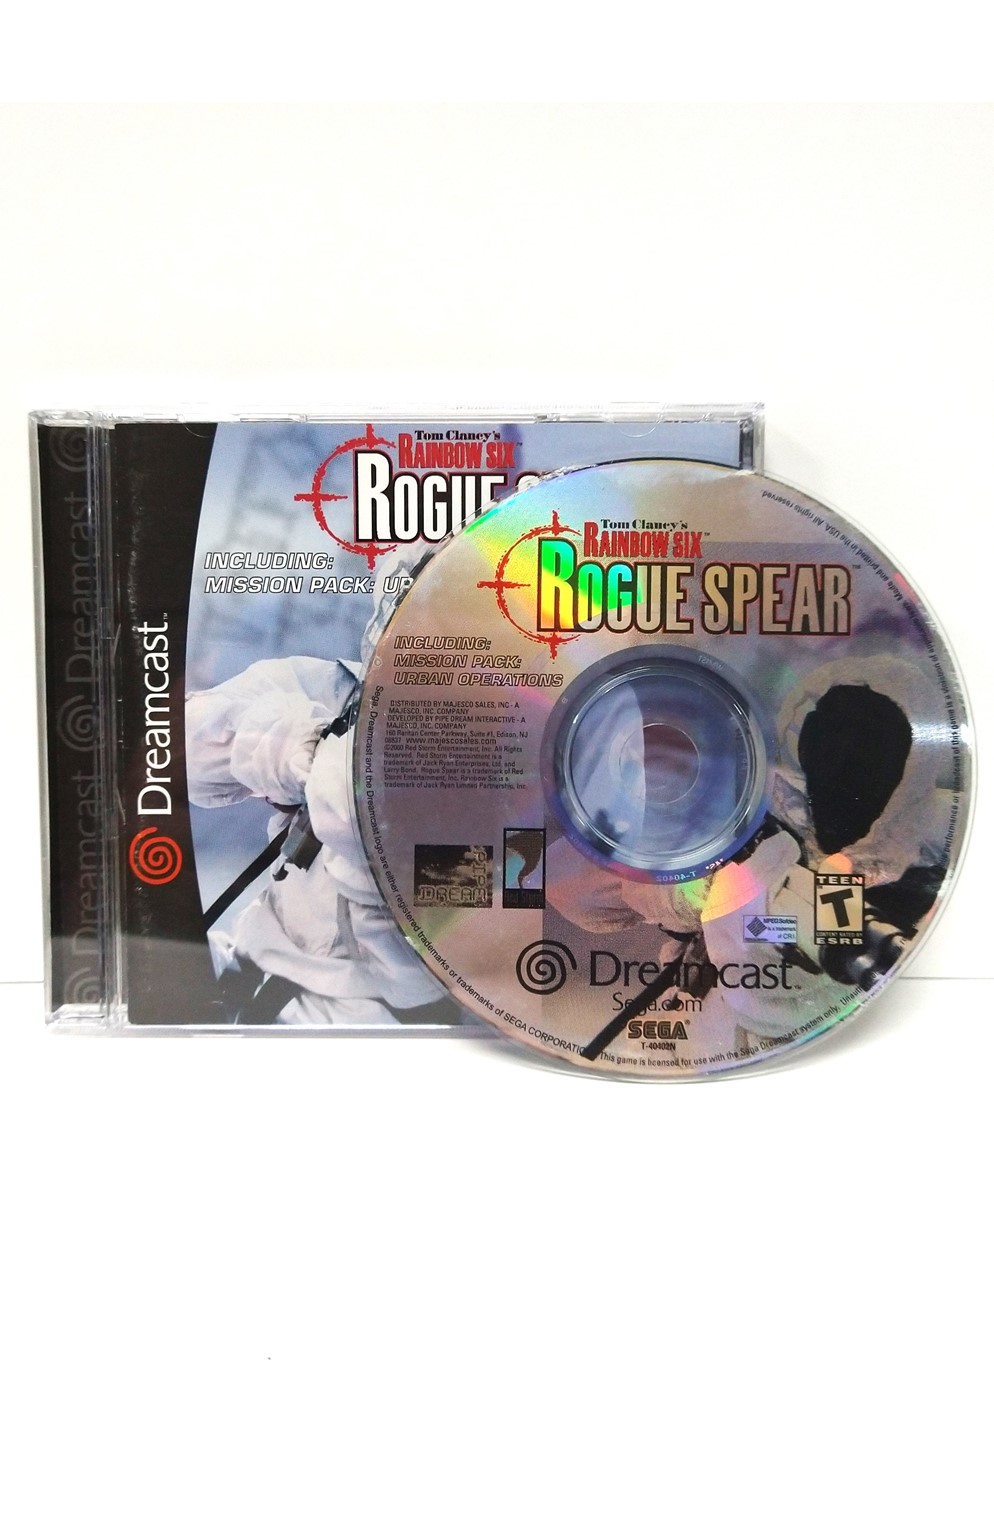 Sega Dreamcast Tom Clancy's Rainbow Six Rogue Spear